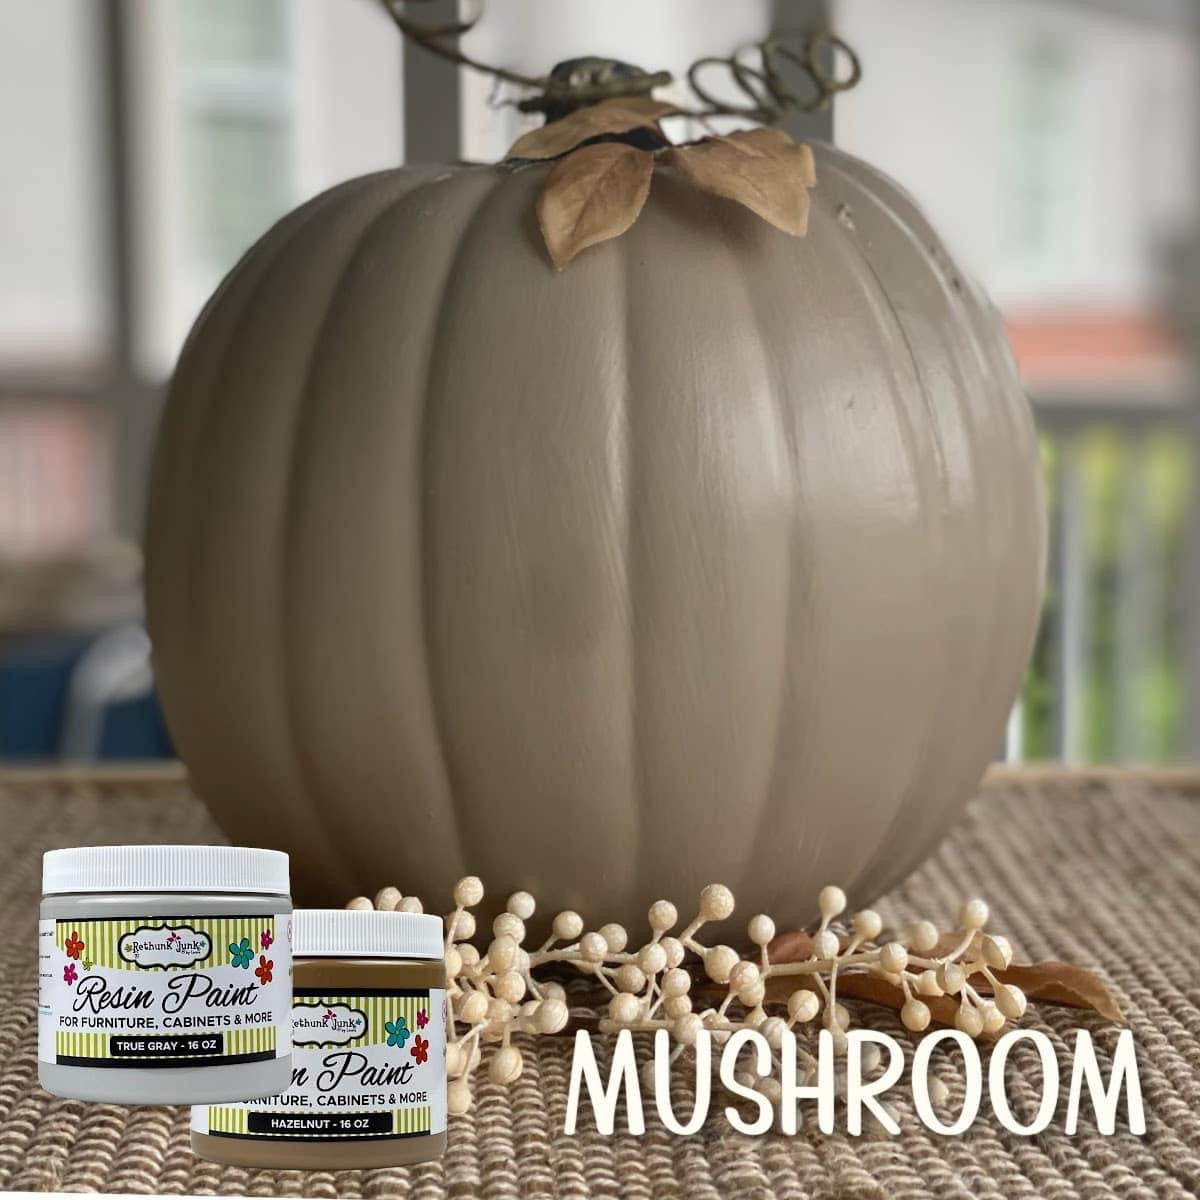 Mushroom Rethunk Junk Recipe Kit